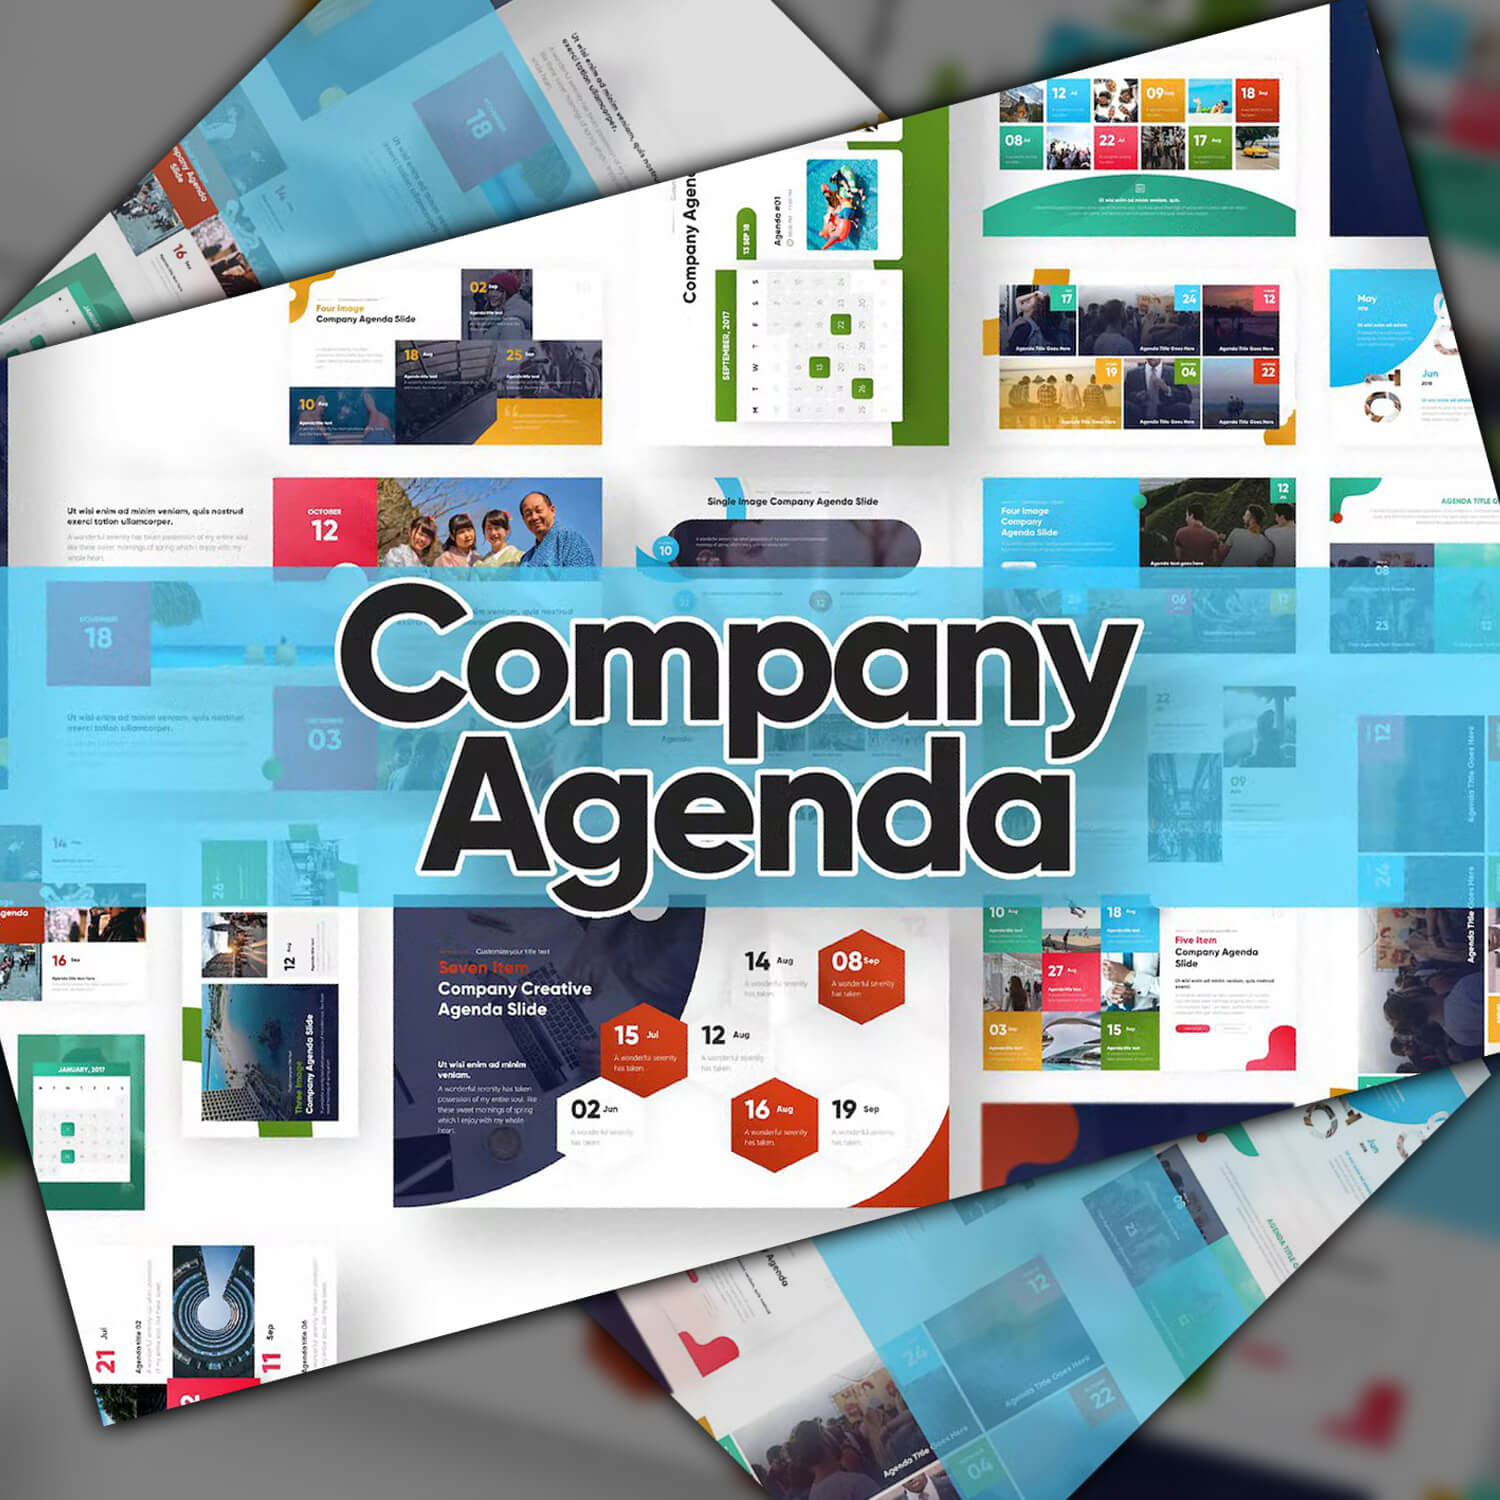 Seven item company creative agenda slide.